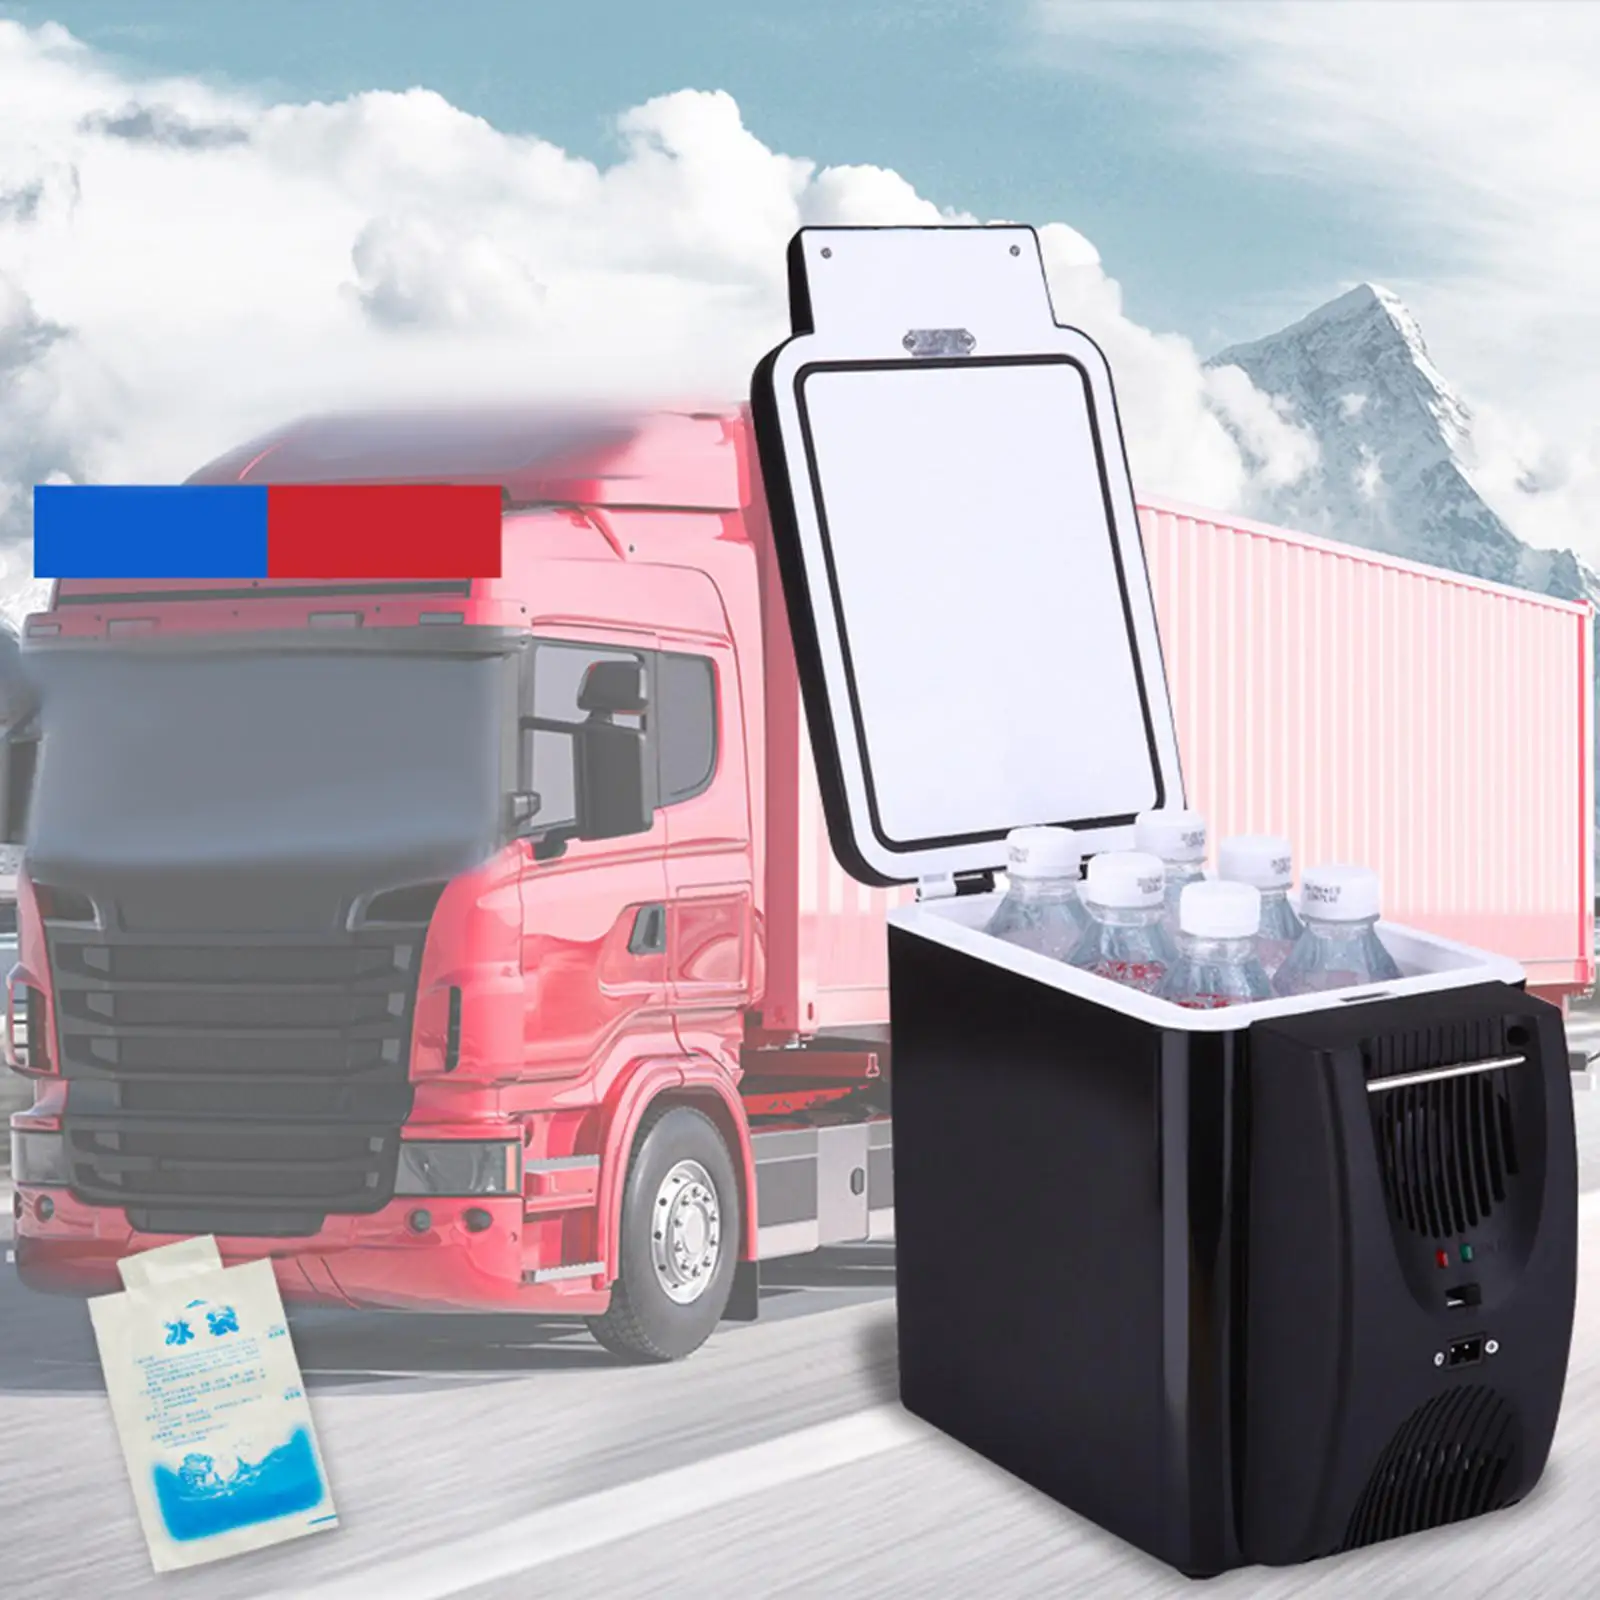 6 Liter Mini Fridge Cooler and Warmer Cooling Warming Dual Use 12V Car Refrigerator for Office Picnic Cars Living Room Drinks